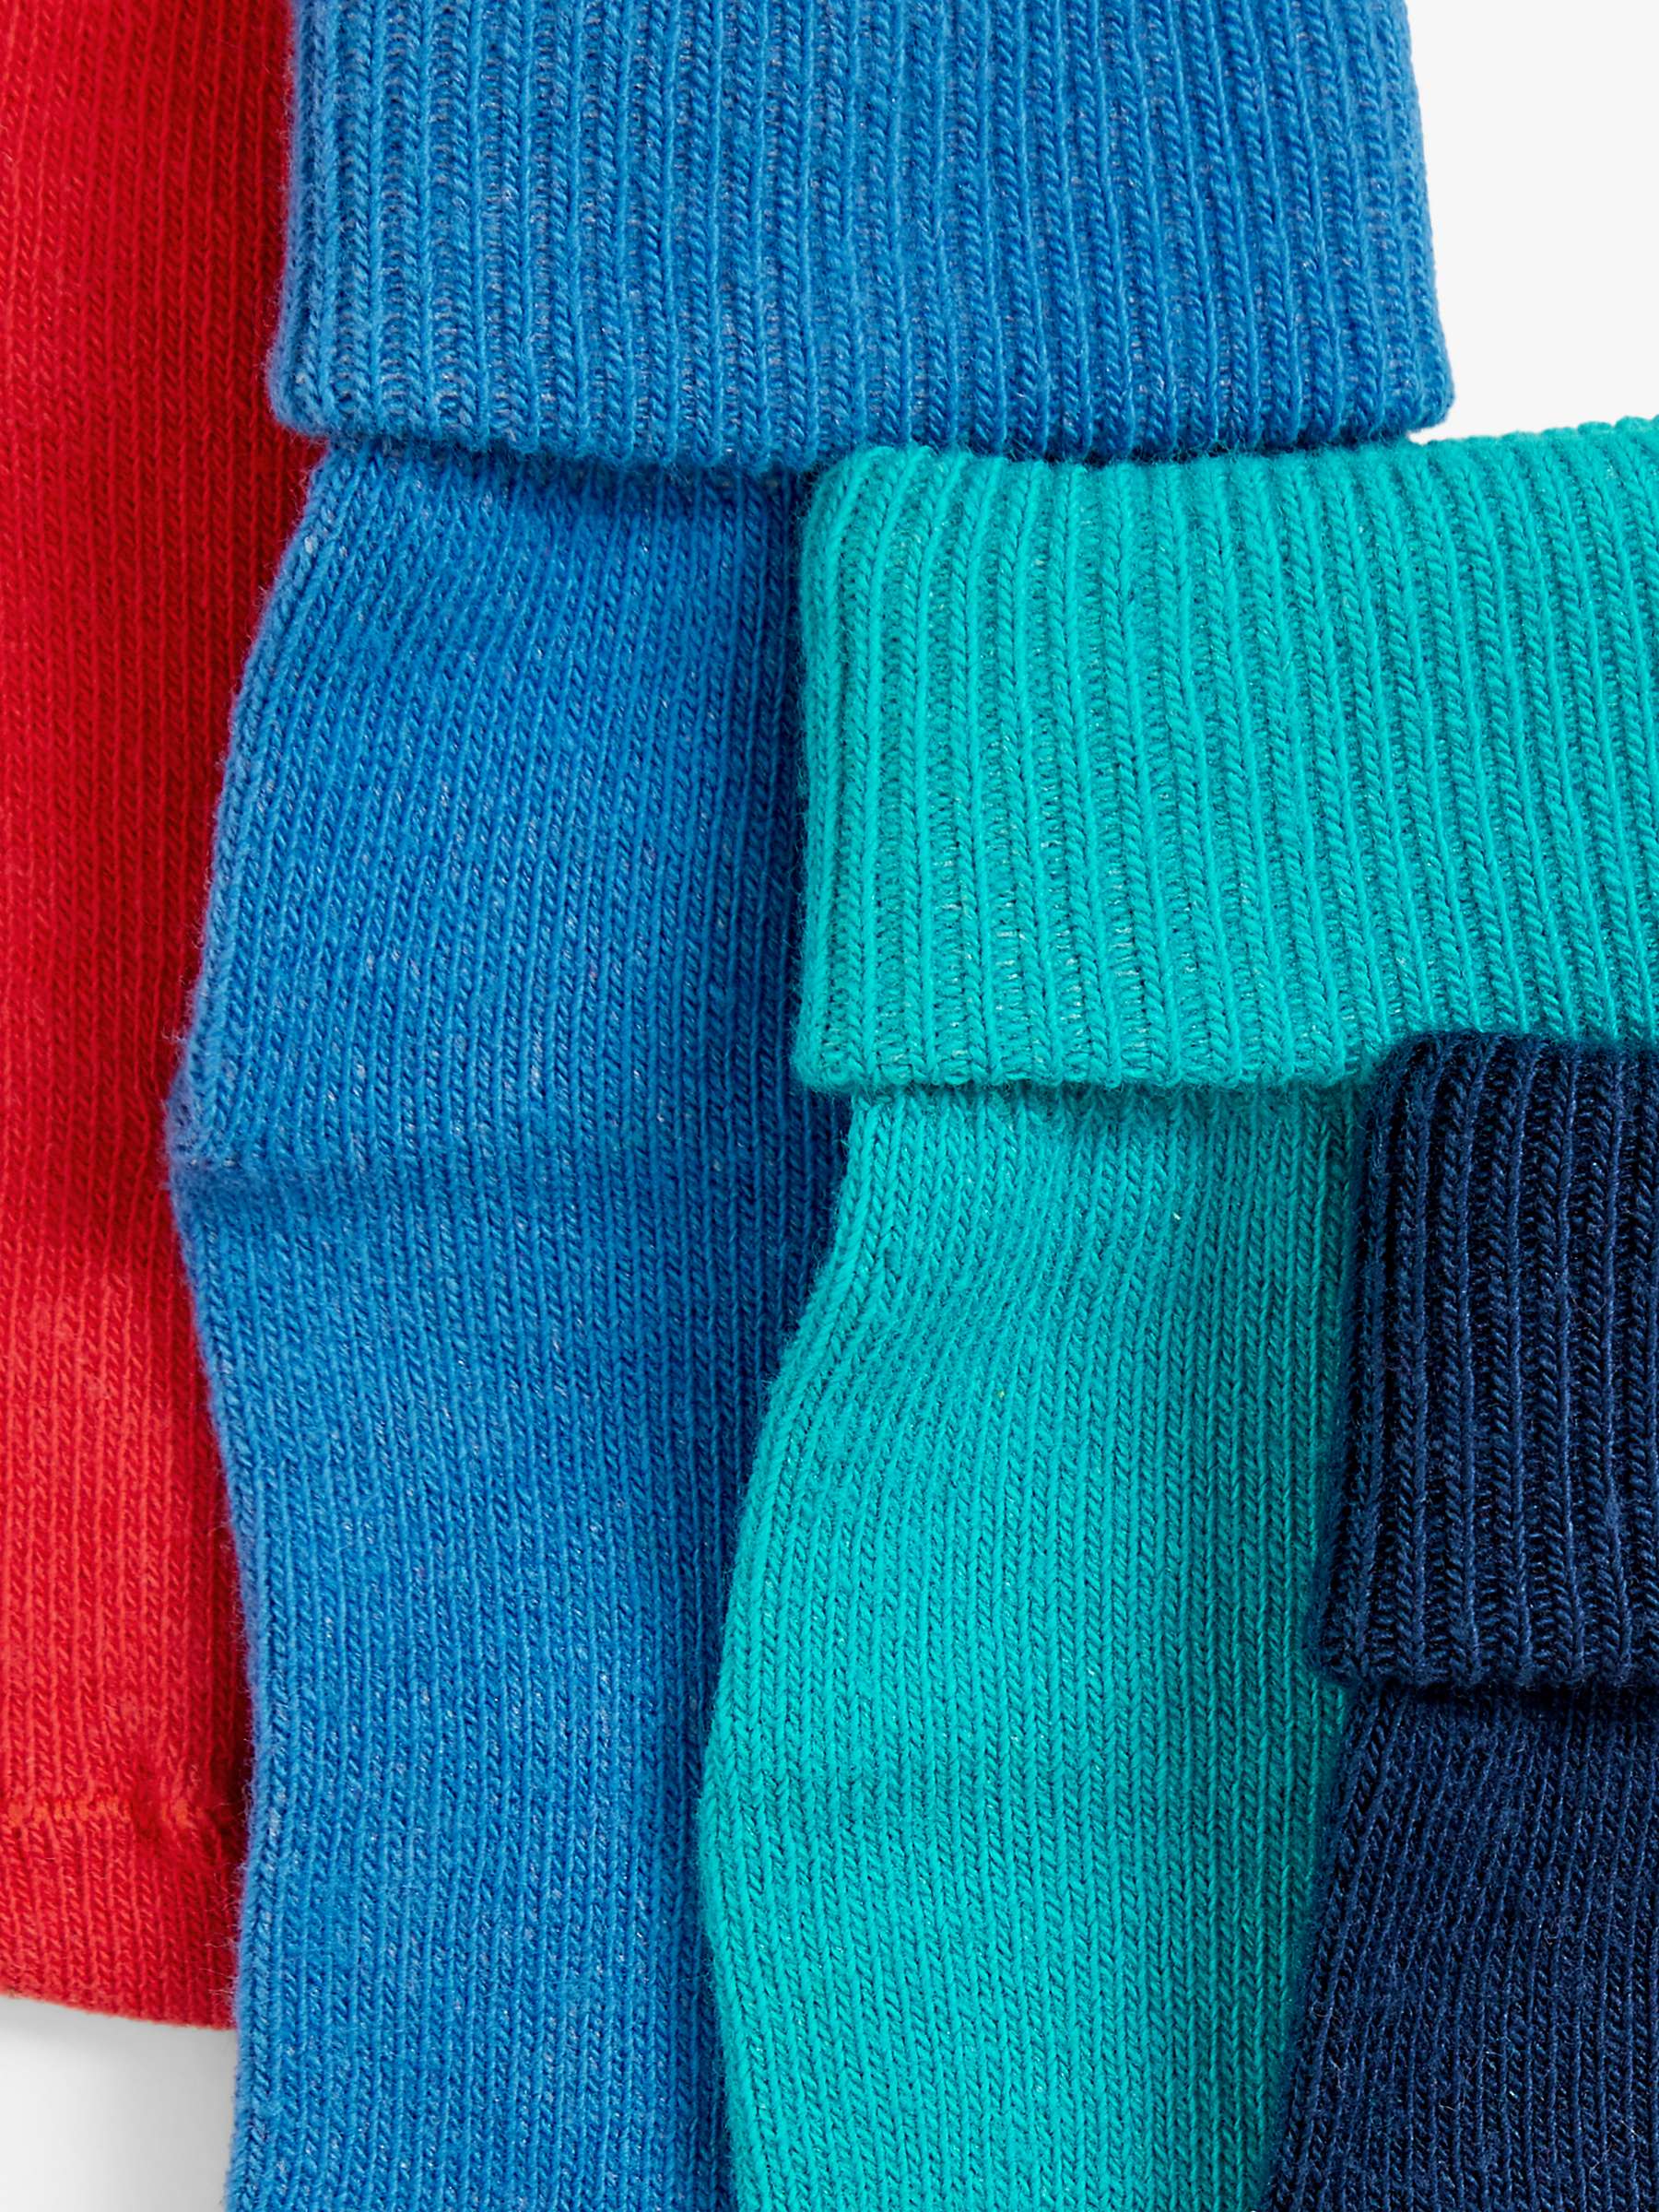 John Lewis Baby Organic Cotton Rich Roll Top Socks, Pack of 5, Blue/Multi  at John Lewis & Partners